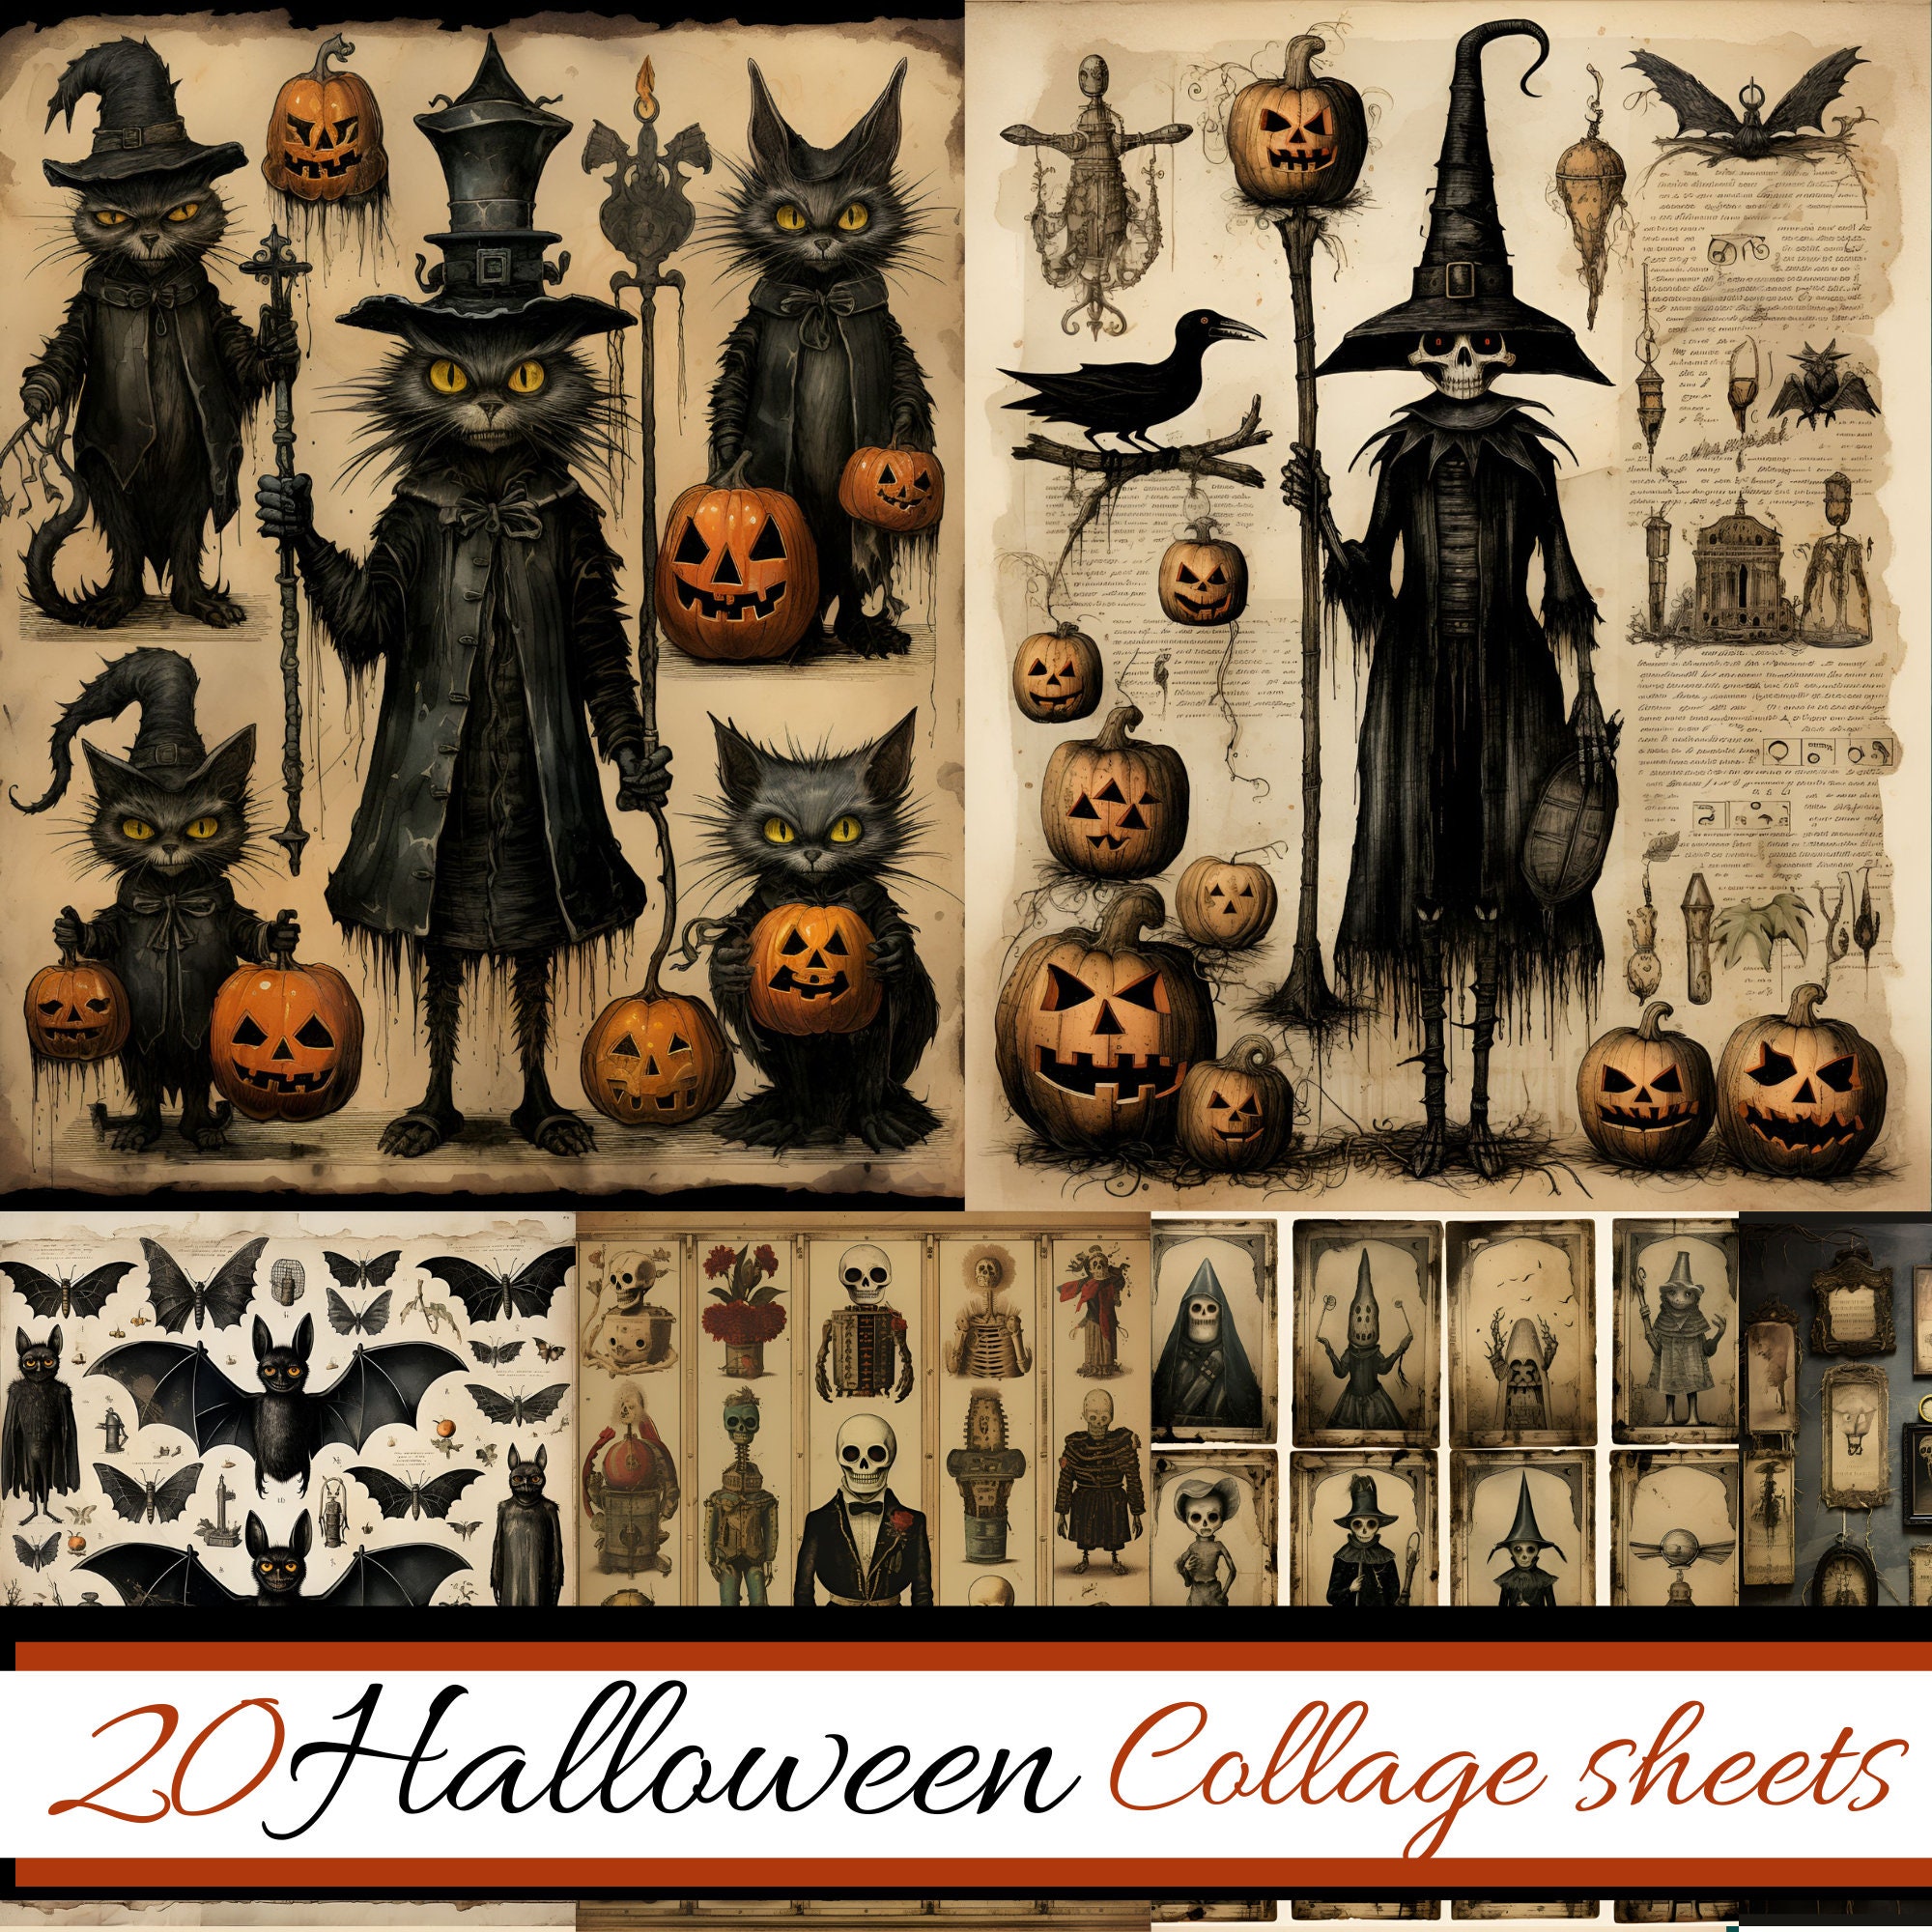 100 Piece Halloween Themed Junk Journal Supplies/kit/pack Scrapbook or  Mixed Media Kit 